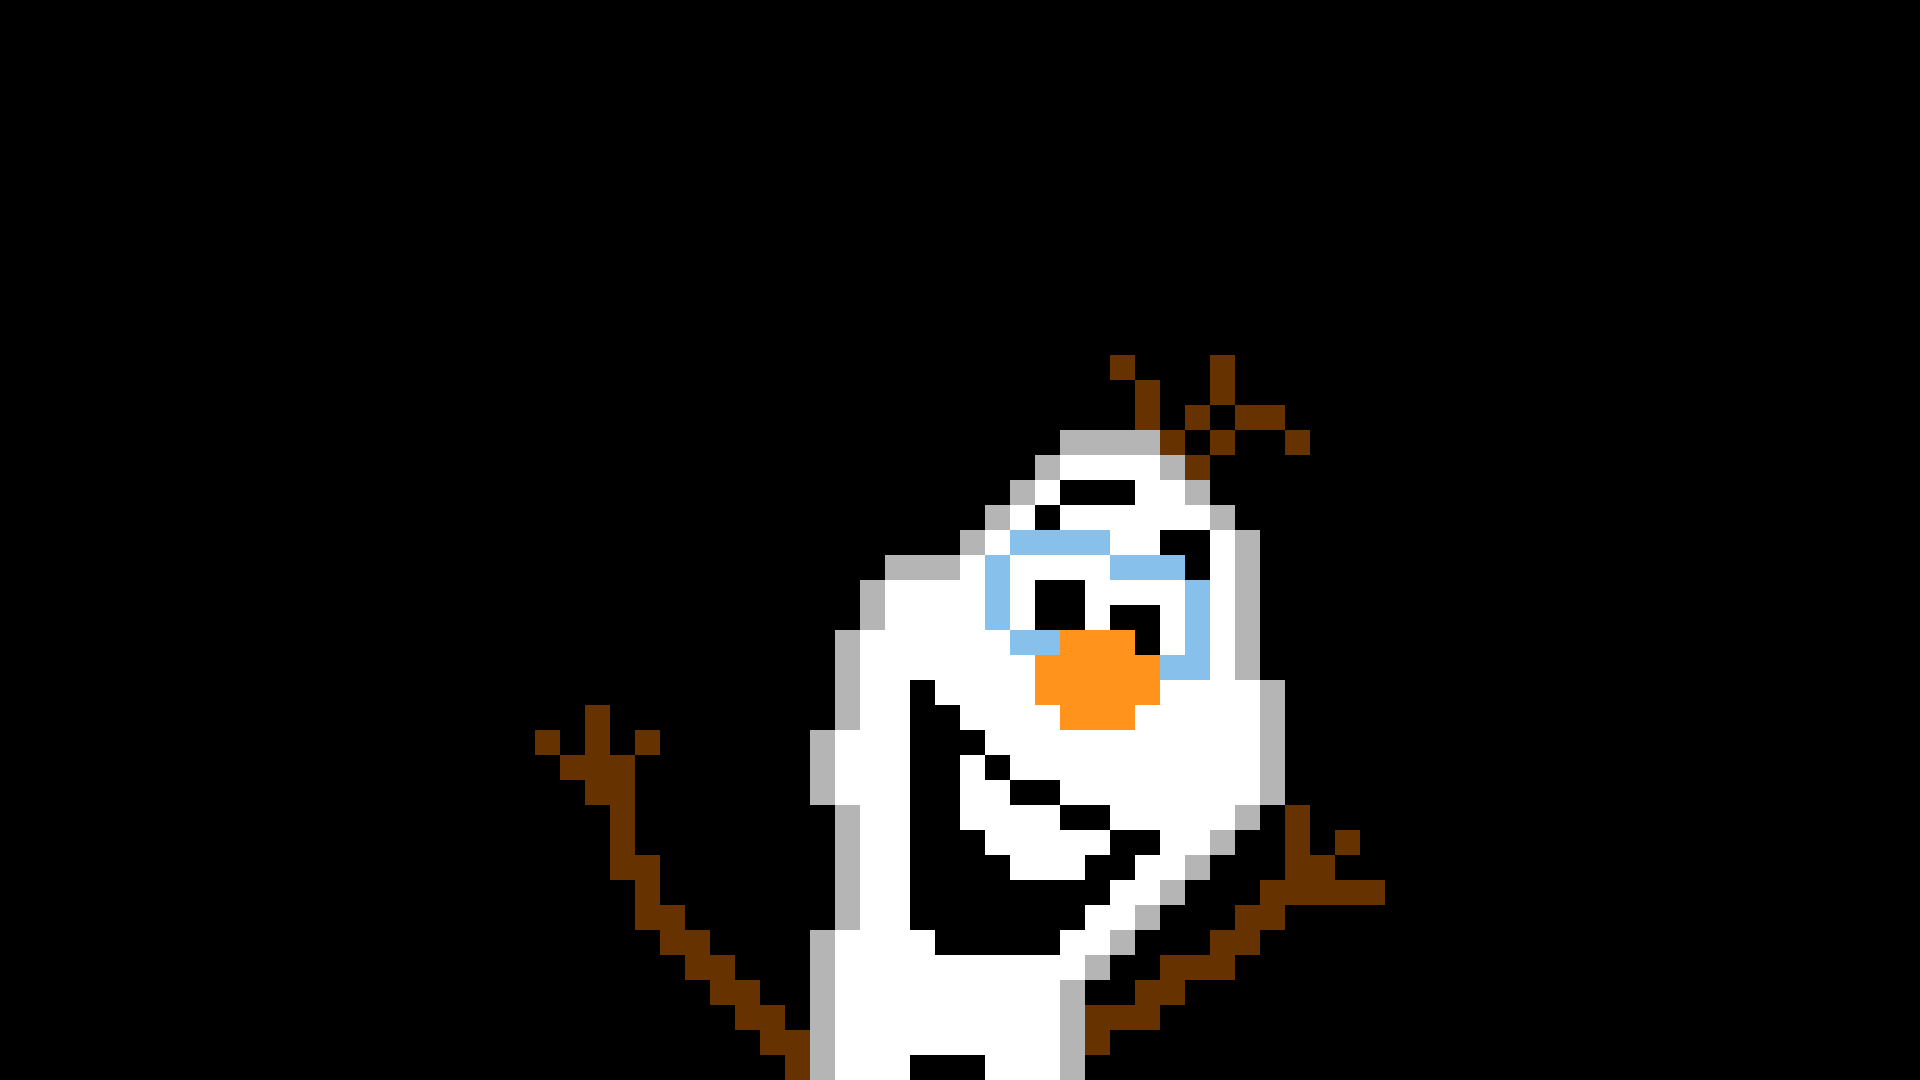 General 1920x1080 pixel art pixels Frozen (movie) Olaf (Frozen) movies minimalism snowman digital art simple background